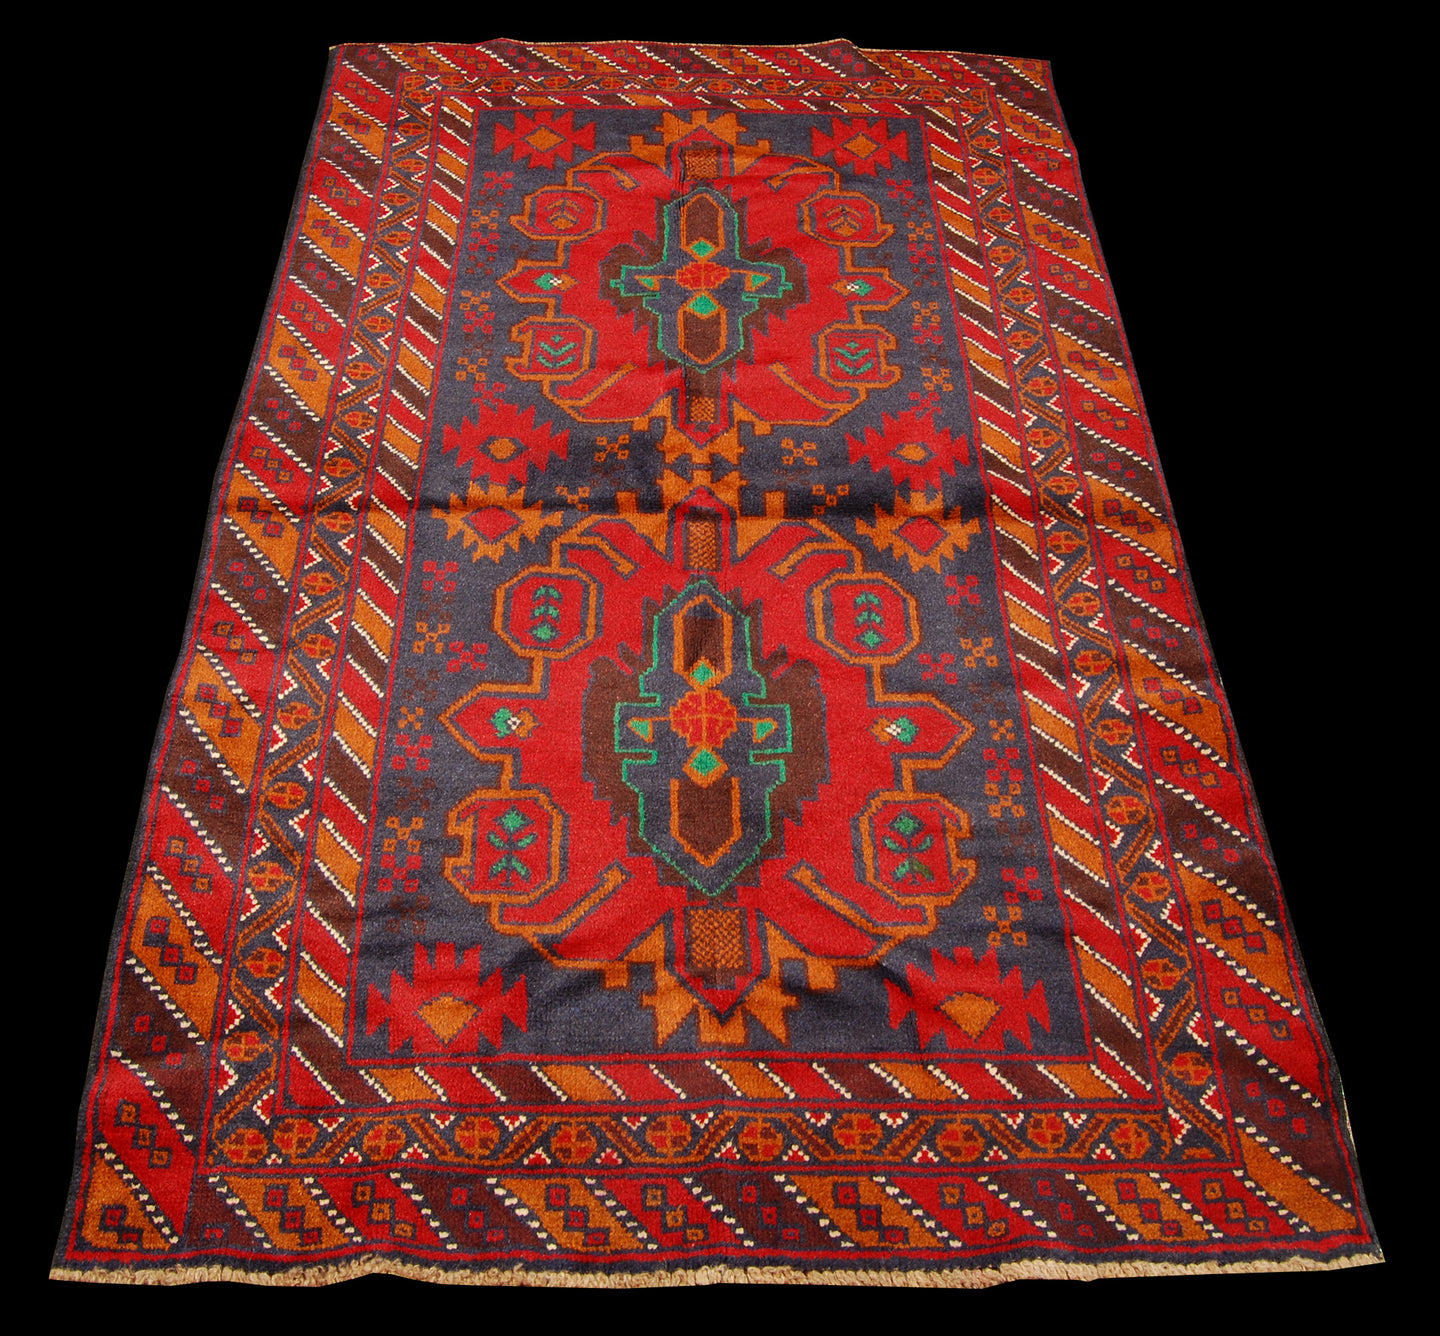 Genuine, Original Pure Wool Rug Rustic Handmad Carpet CM 180x108